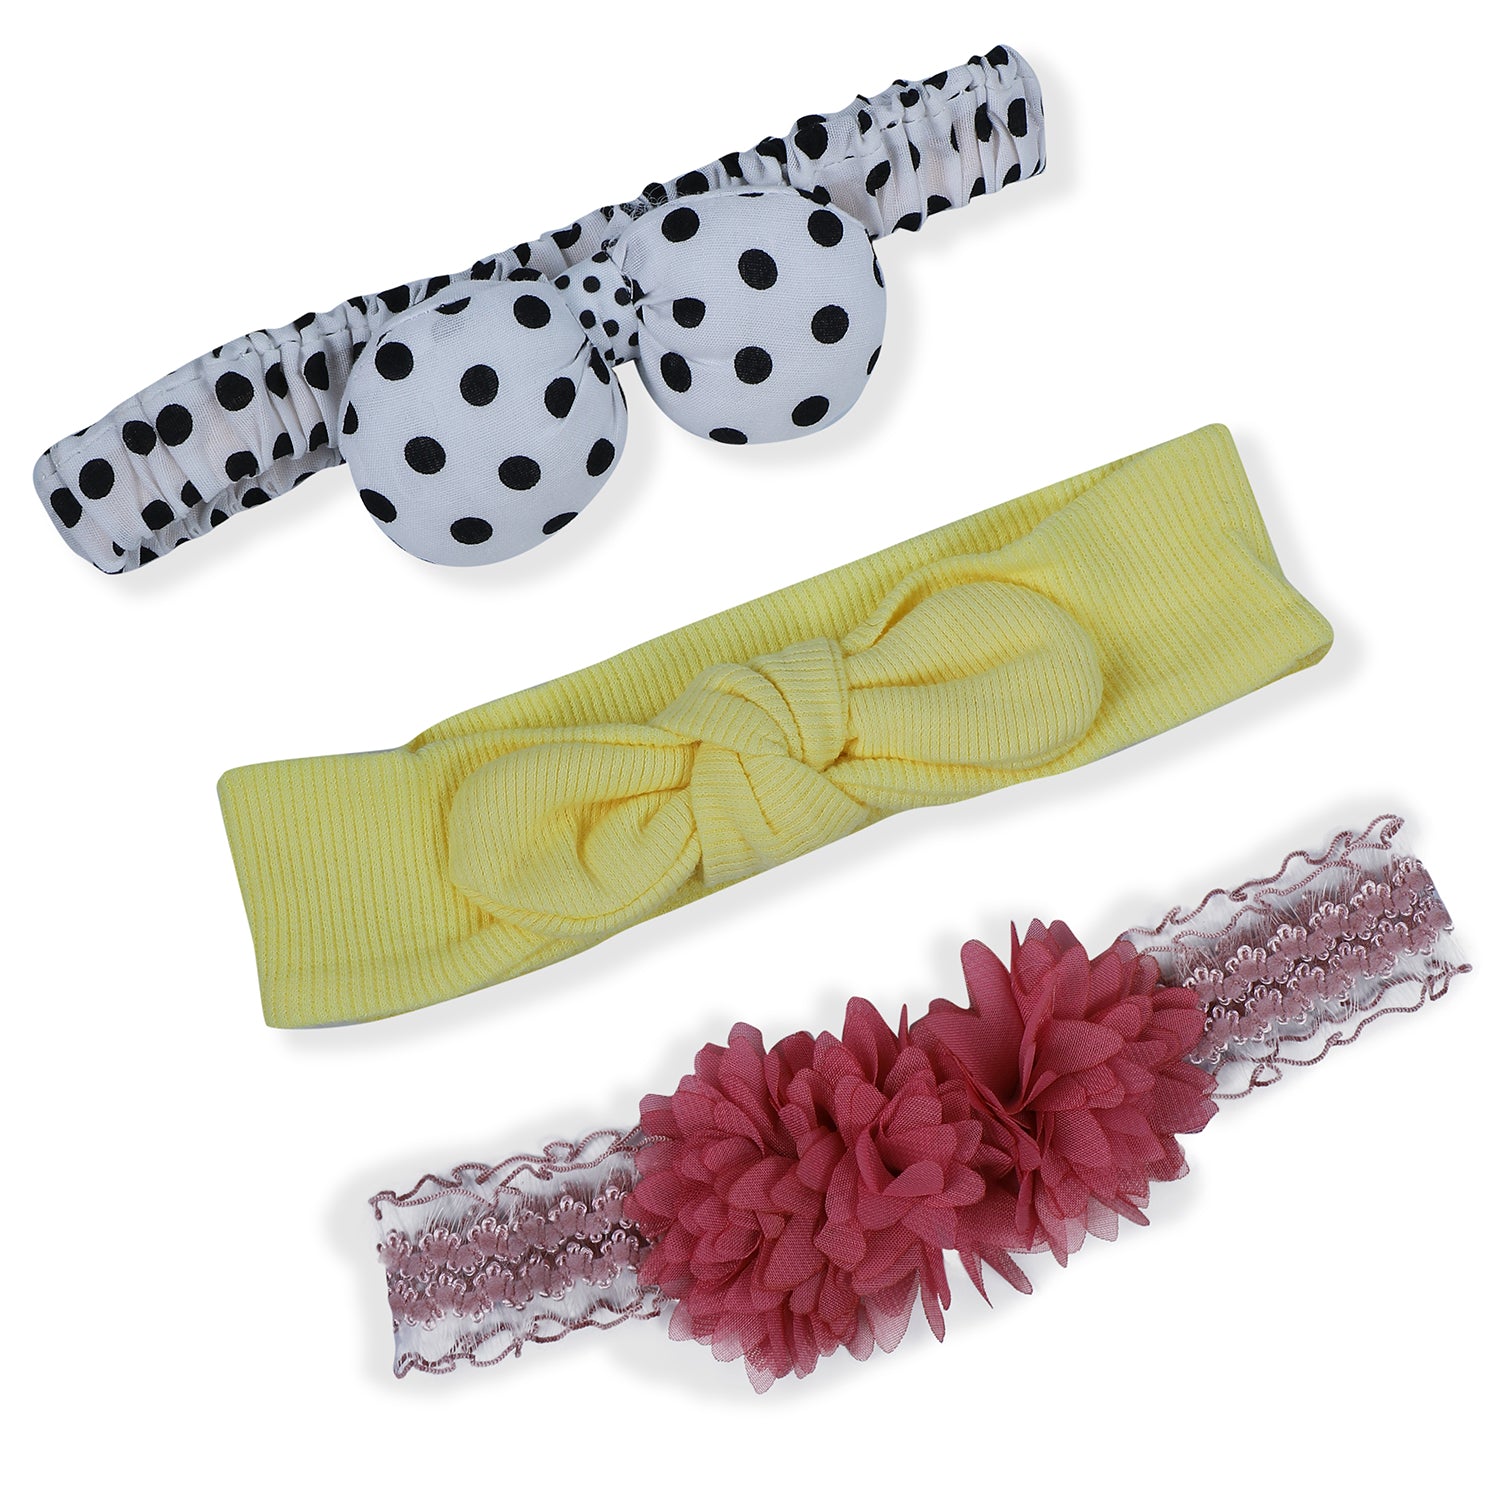 Baby Moo Floral Polka Dots Headband Set of 3 - Multicolour - Baby Moo